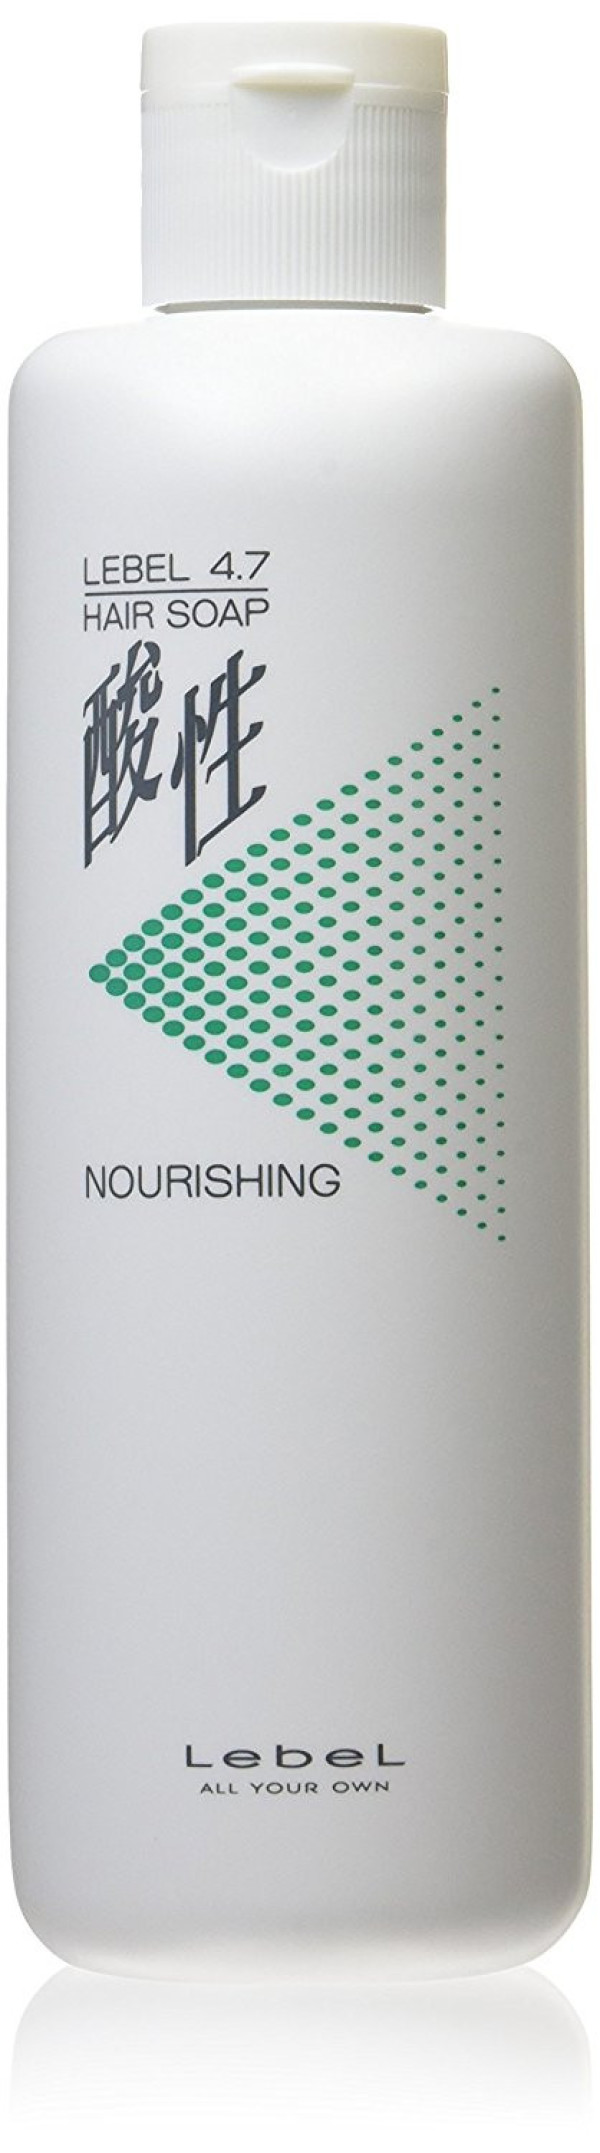 Lebel PH 4.7 Nourishing Hair Soap